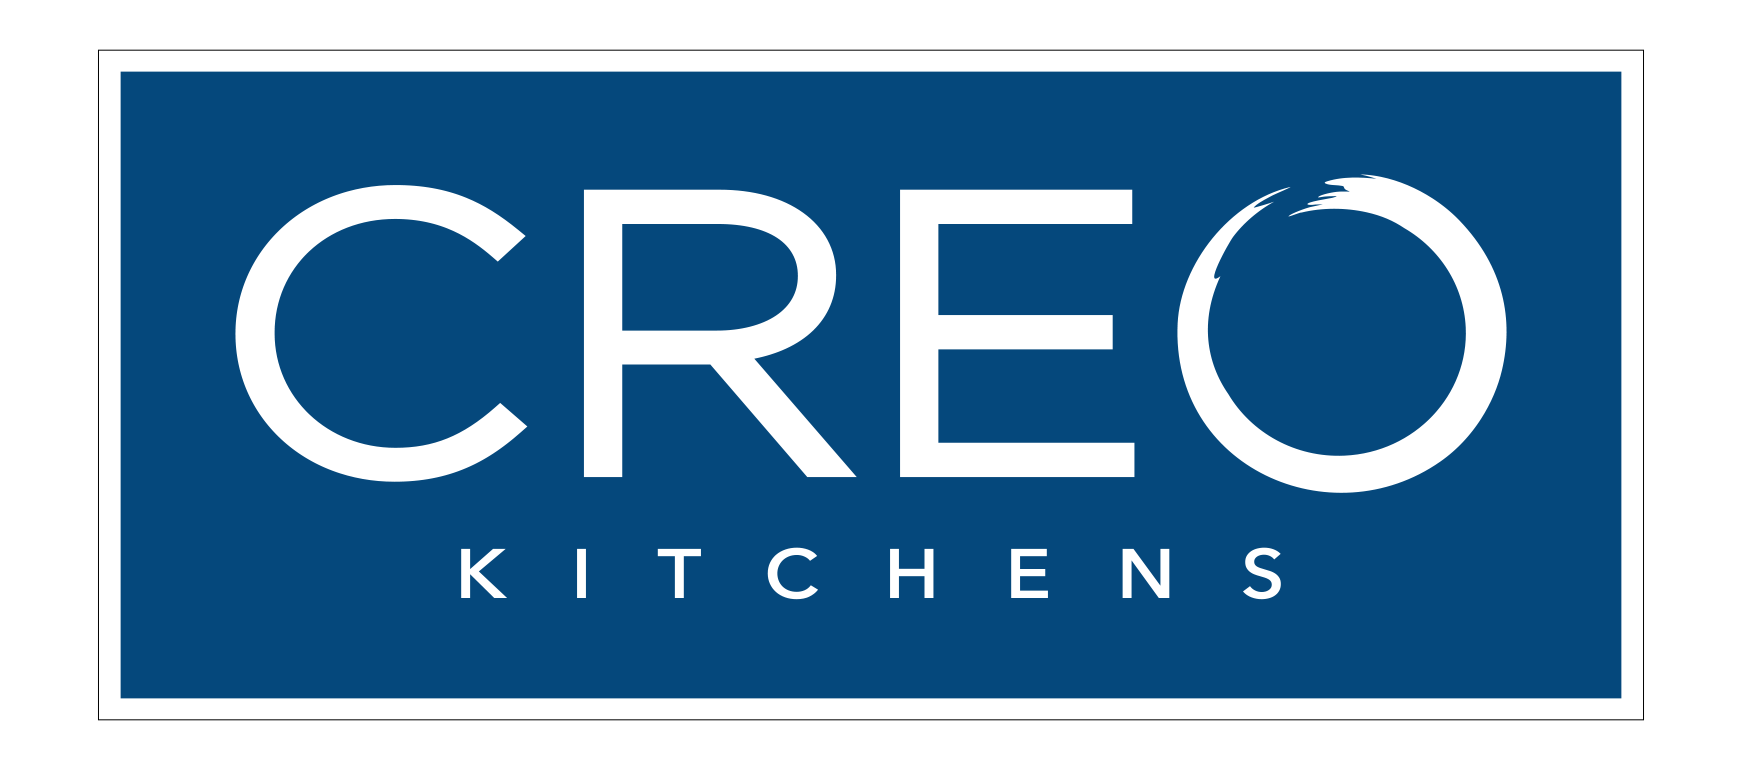 Qualità cucine creo - Creokitchens.it